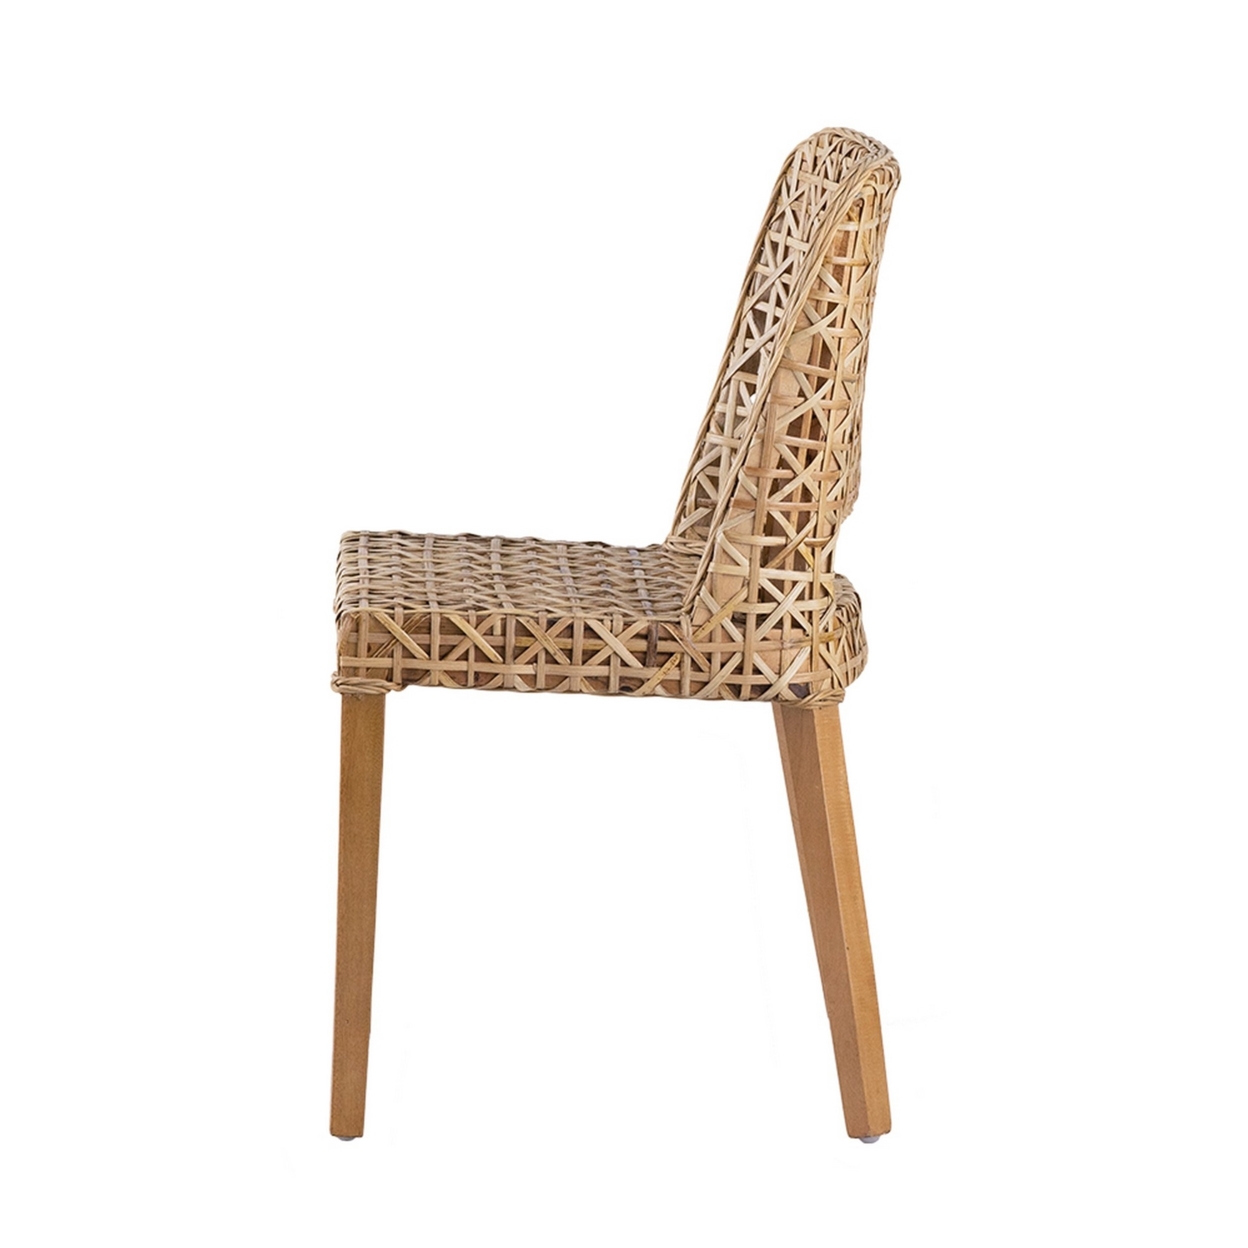 21 Inch Dining Side Chair, Woven Rattan Backrest, Wood Frame, Natural Brown- Saltoro Sherpi